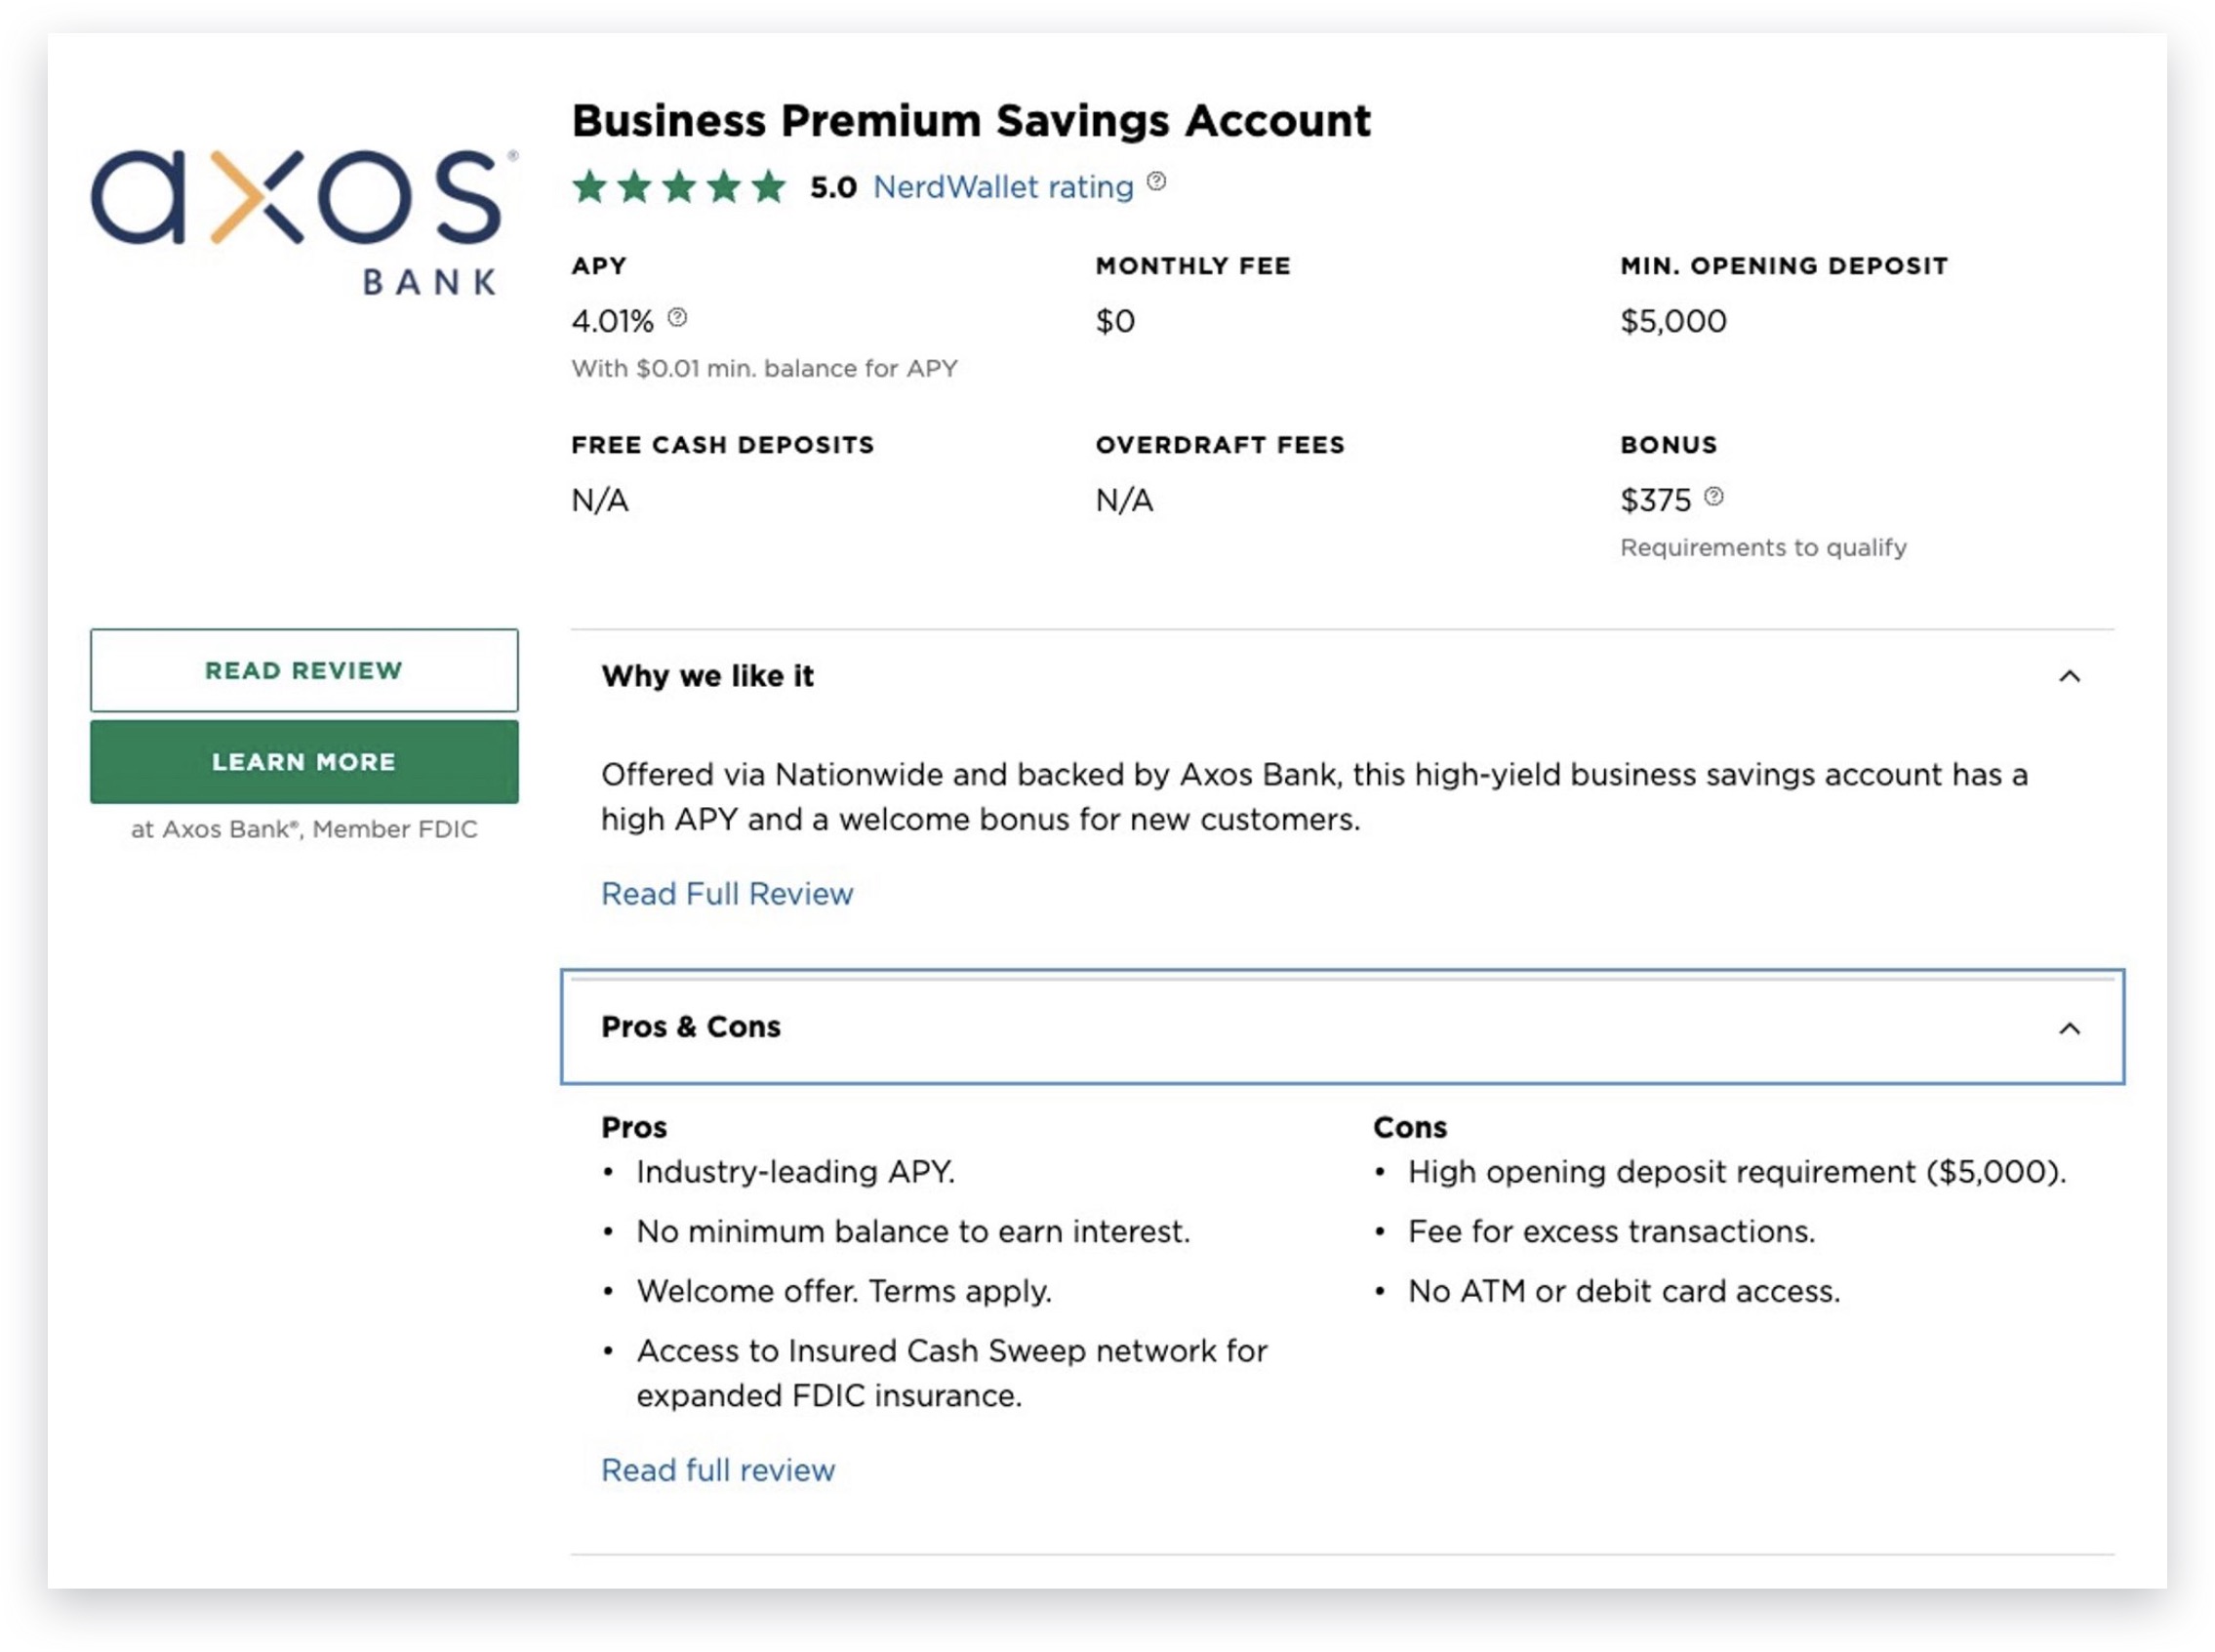 AXOS Business Premium Savings Account